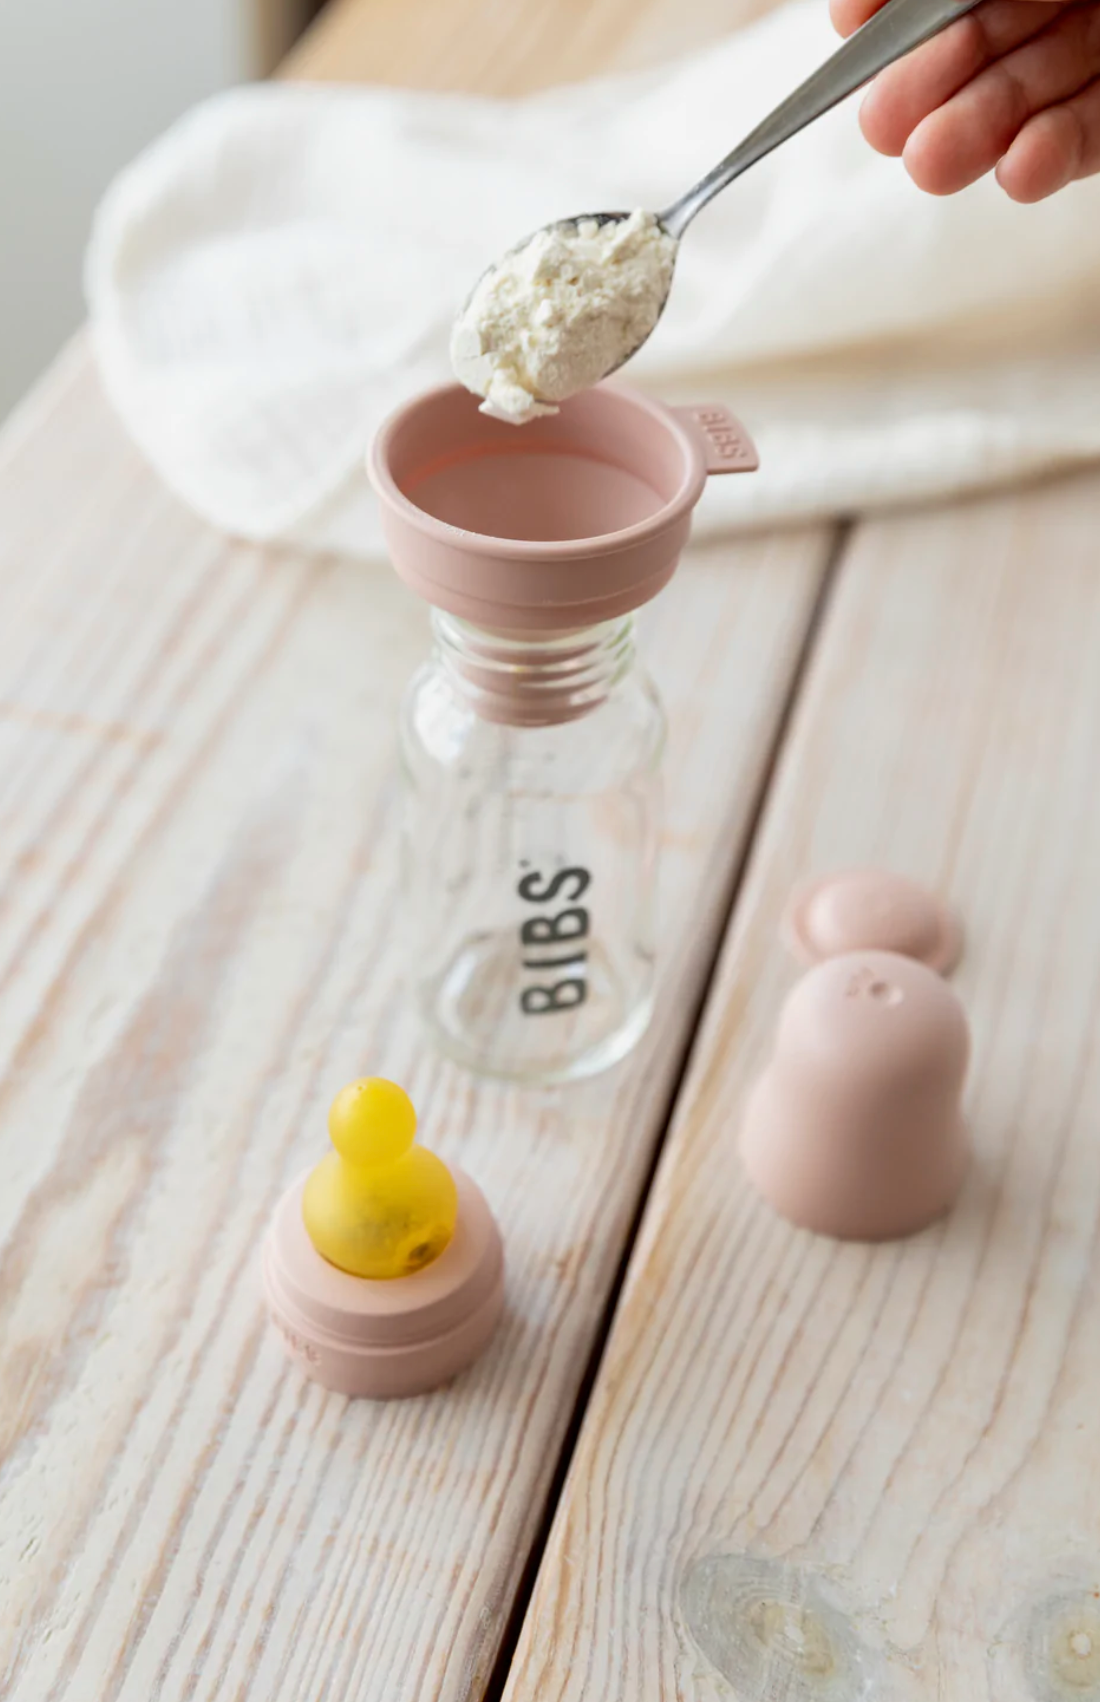 BIBS Baby Glass Bottle - Complete Set 4 Ounce - Blush